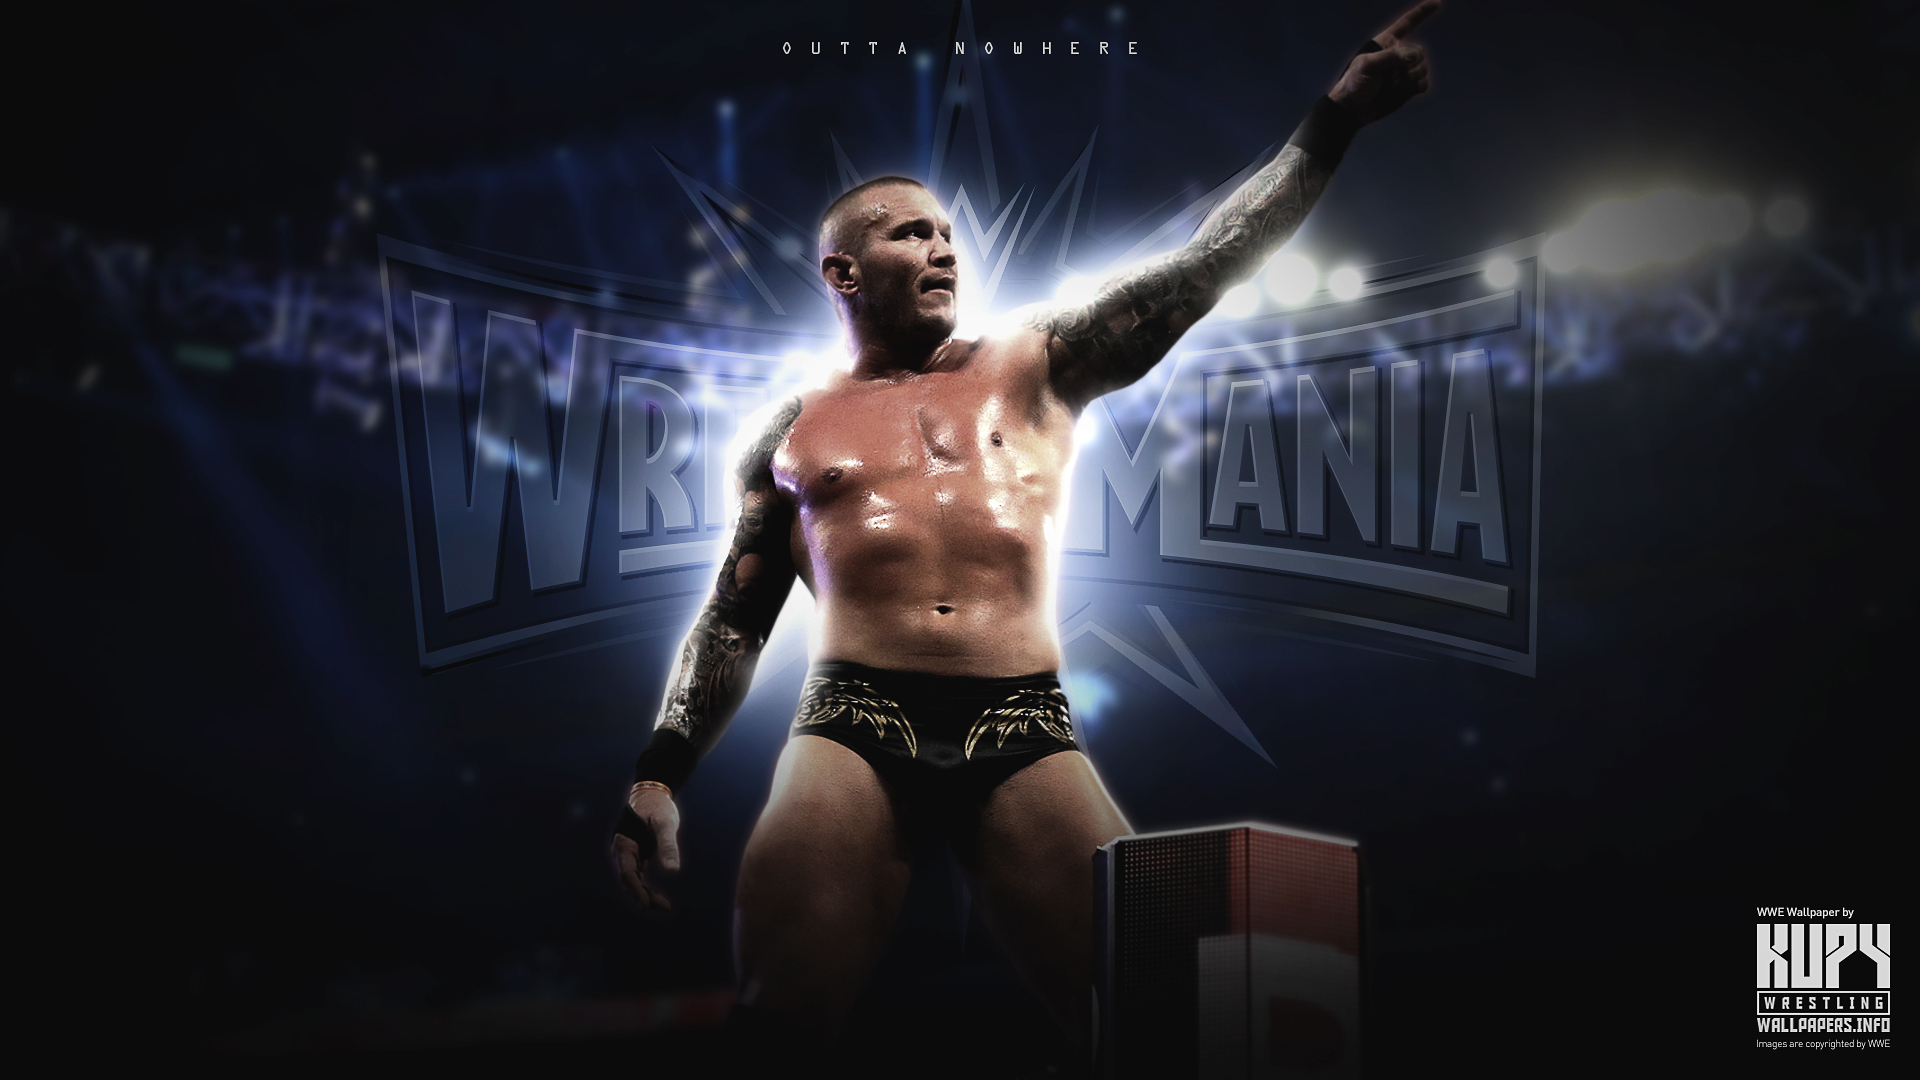 1920x1080 NEW Road to WrestleMania 33: Randy Orton 2017 Royal Rumble Winner wallpaper! Kupy Wrestling Wallpapers